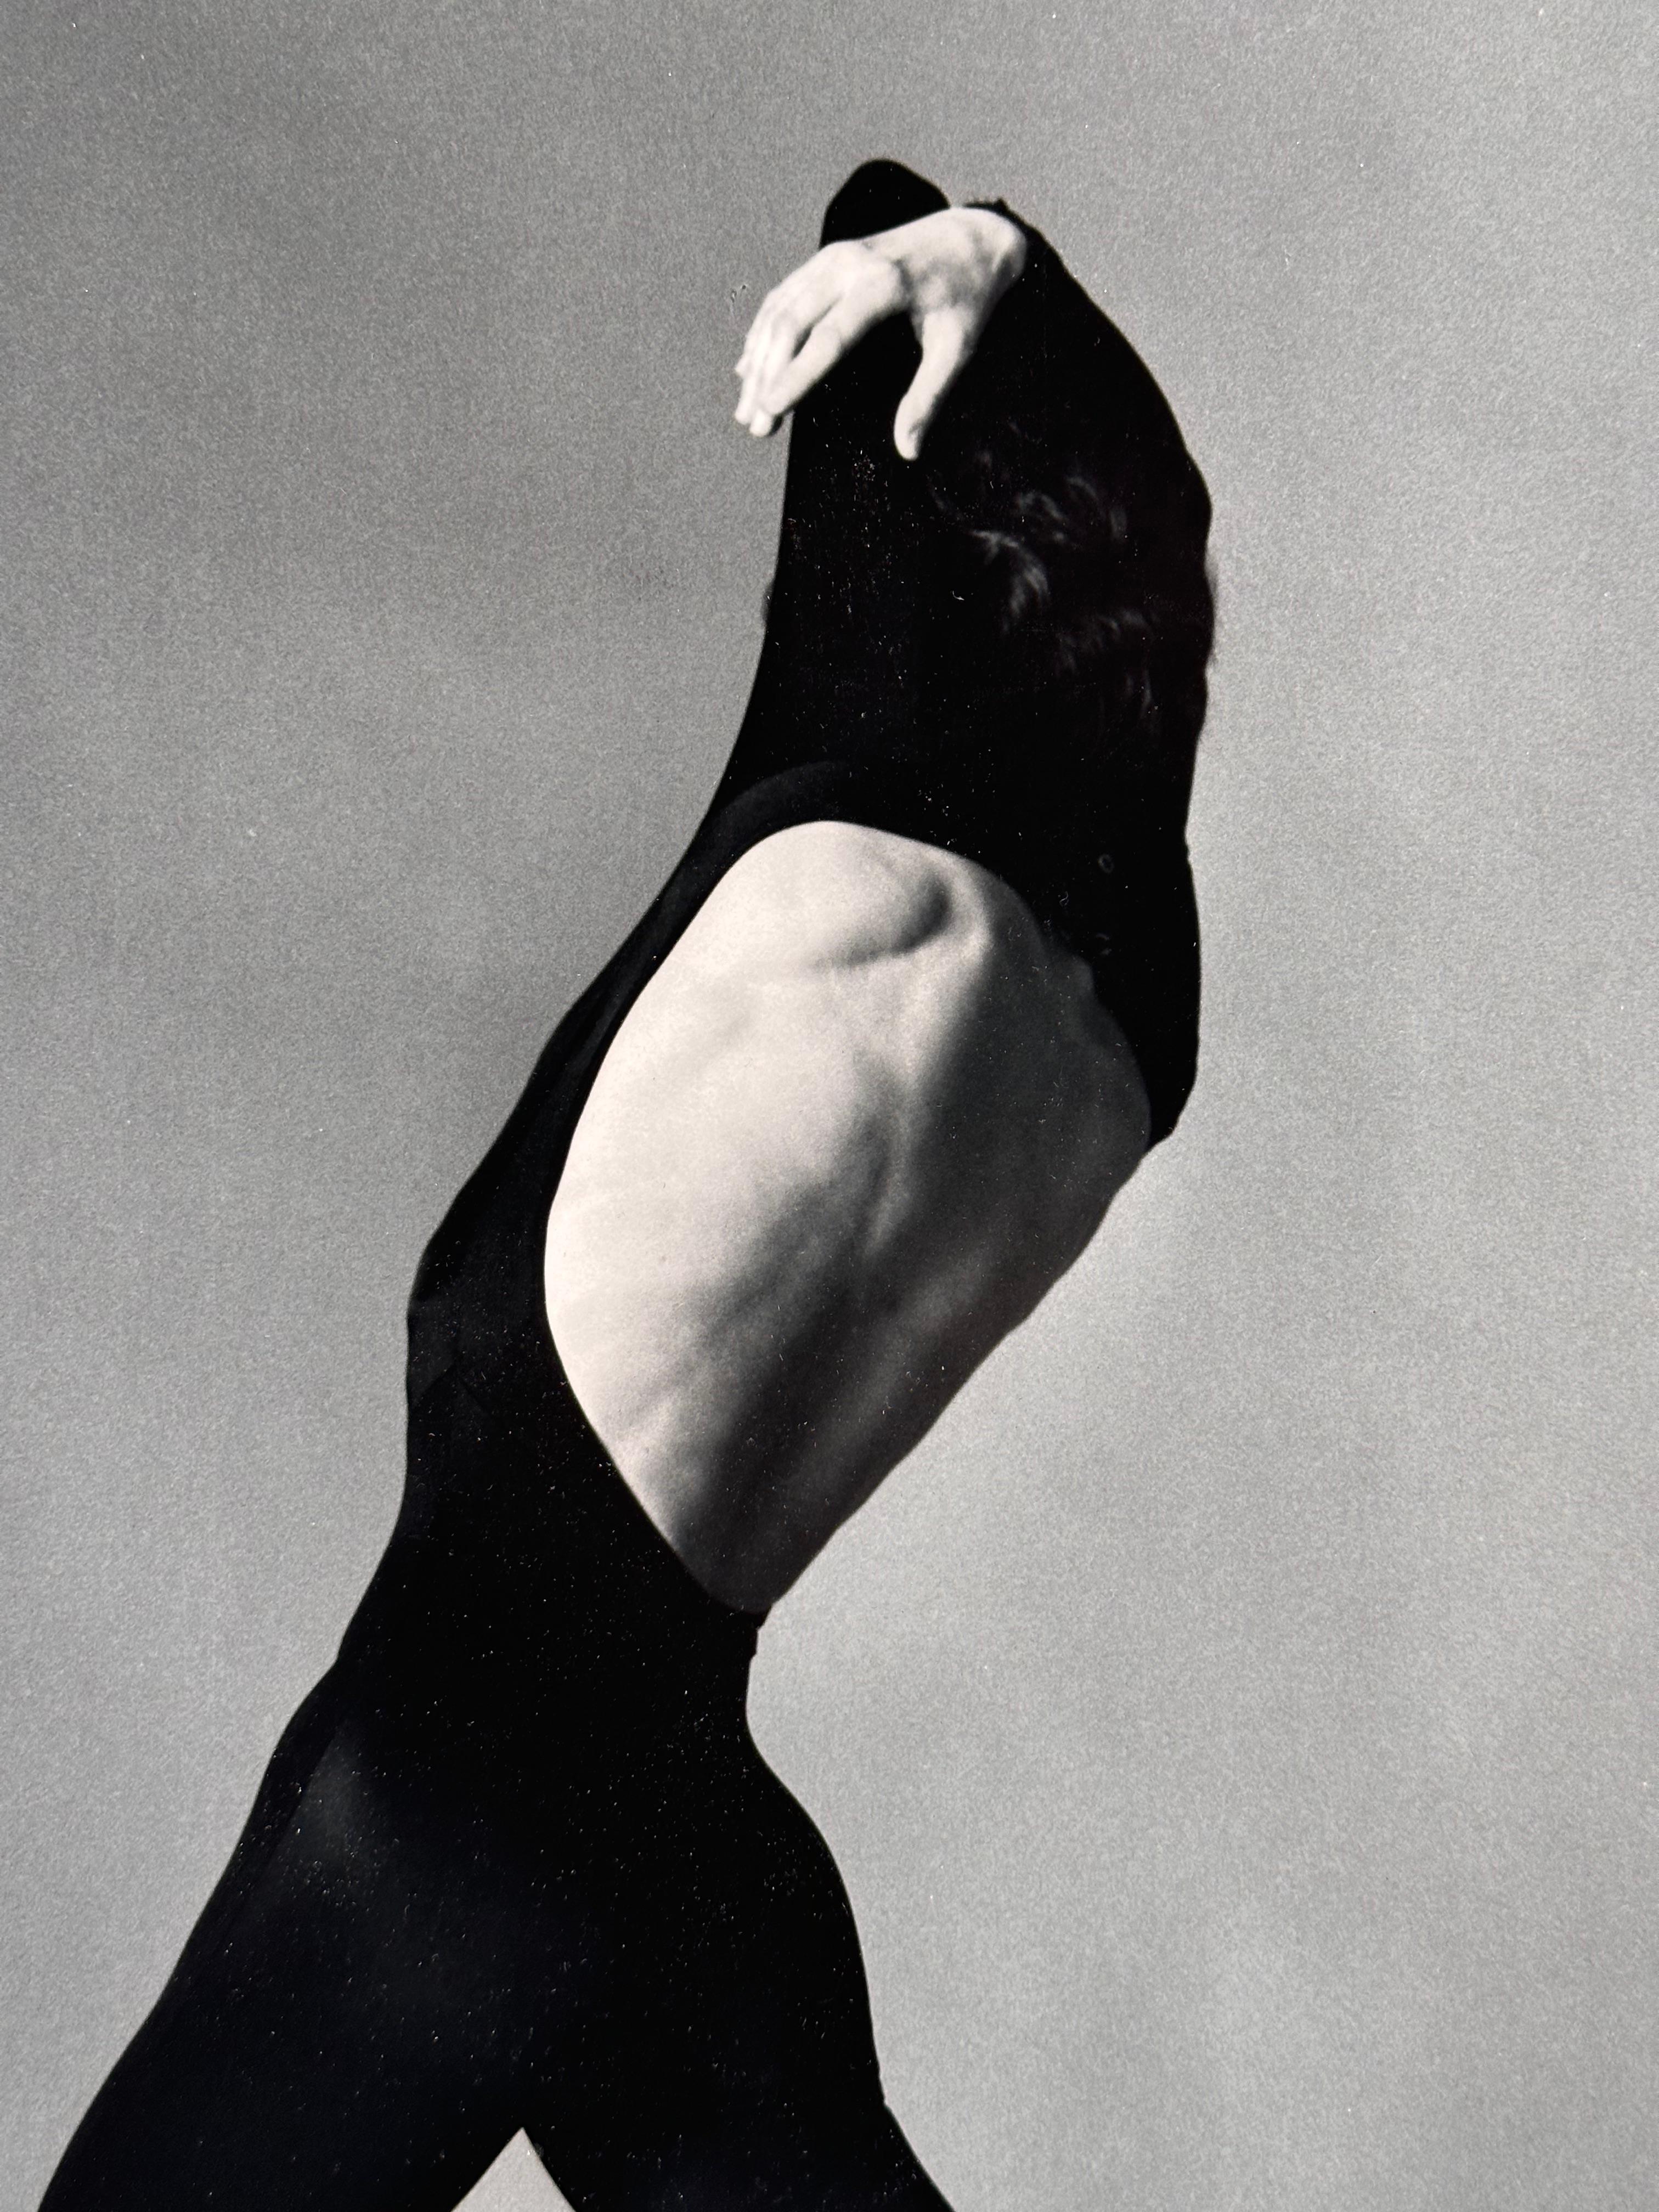  Pascale Faye #1, Dancer photo - Photograph by Howard Schatz